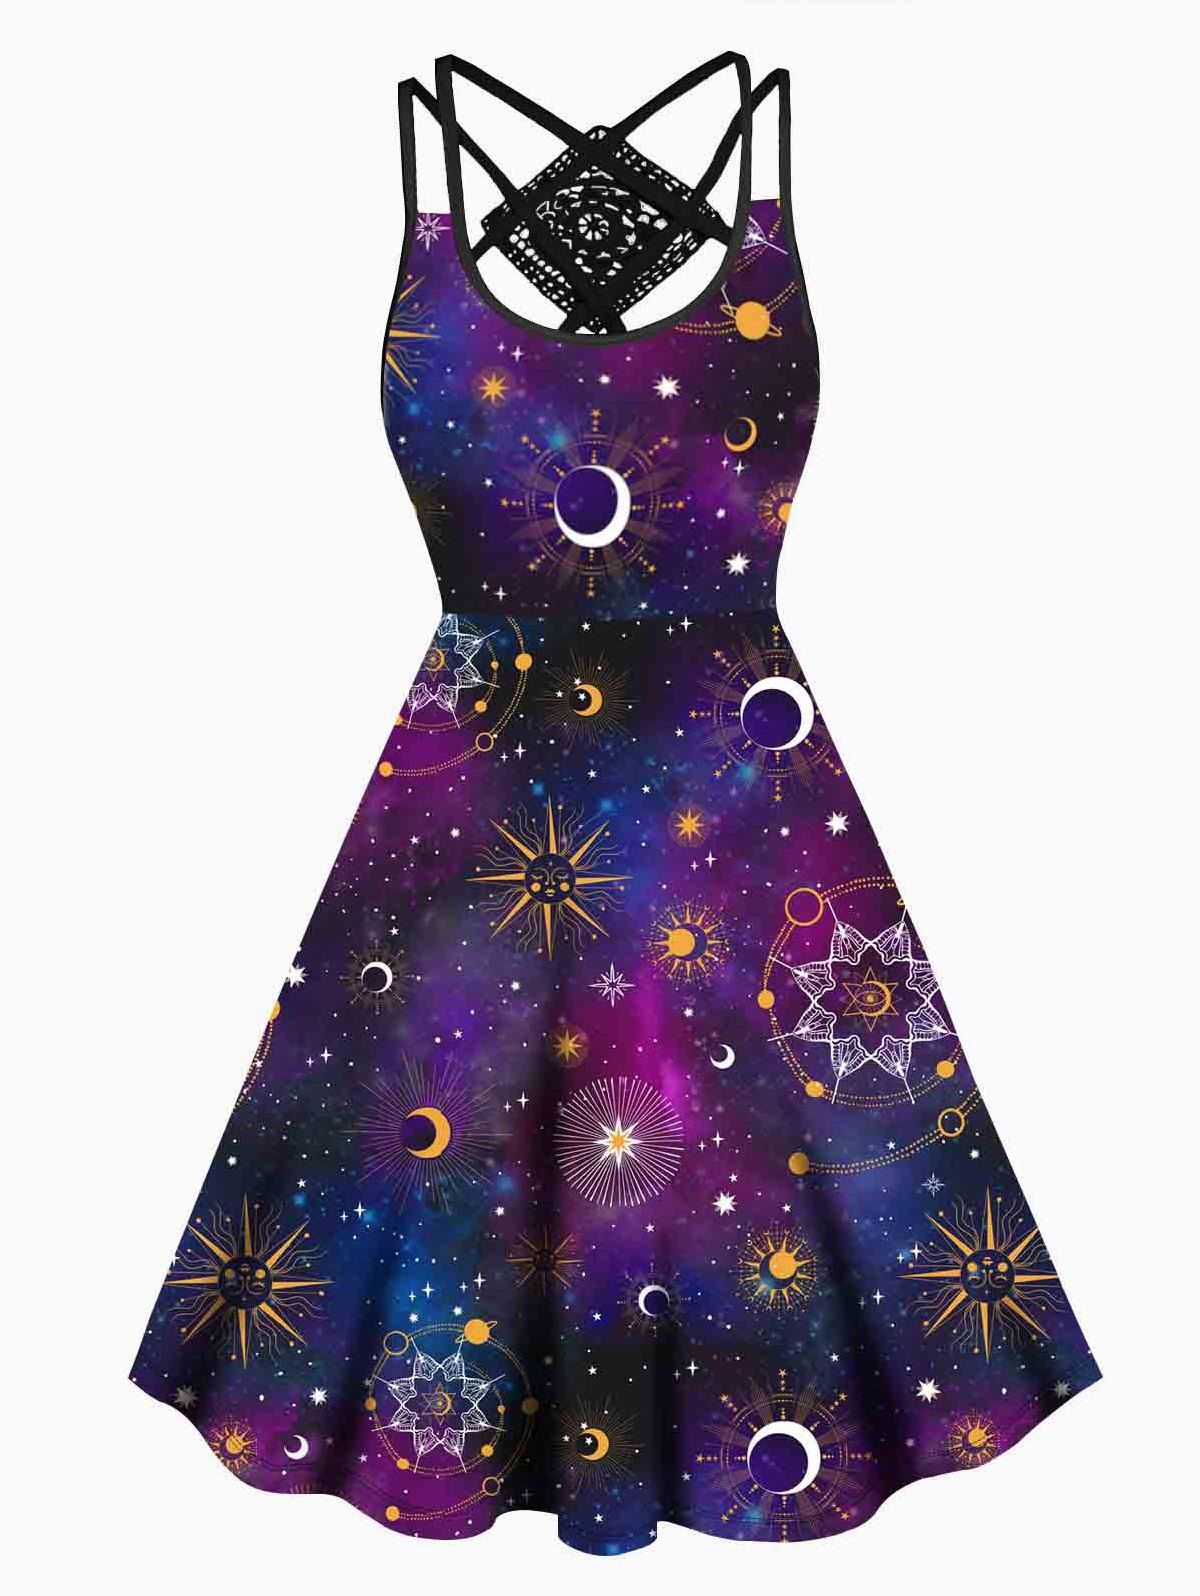 Celestial Galaxy Sun Moon Star Print Dress Lace Panel Crisscross High Waisted Sleeveless A Line Midi Dress - CONCORD M